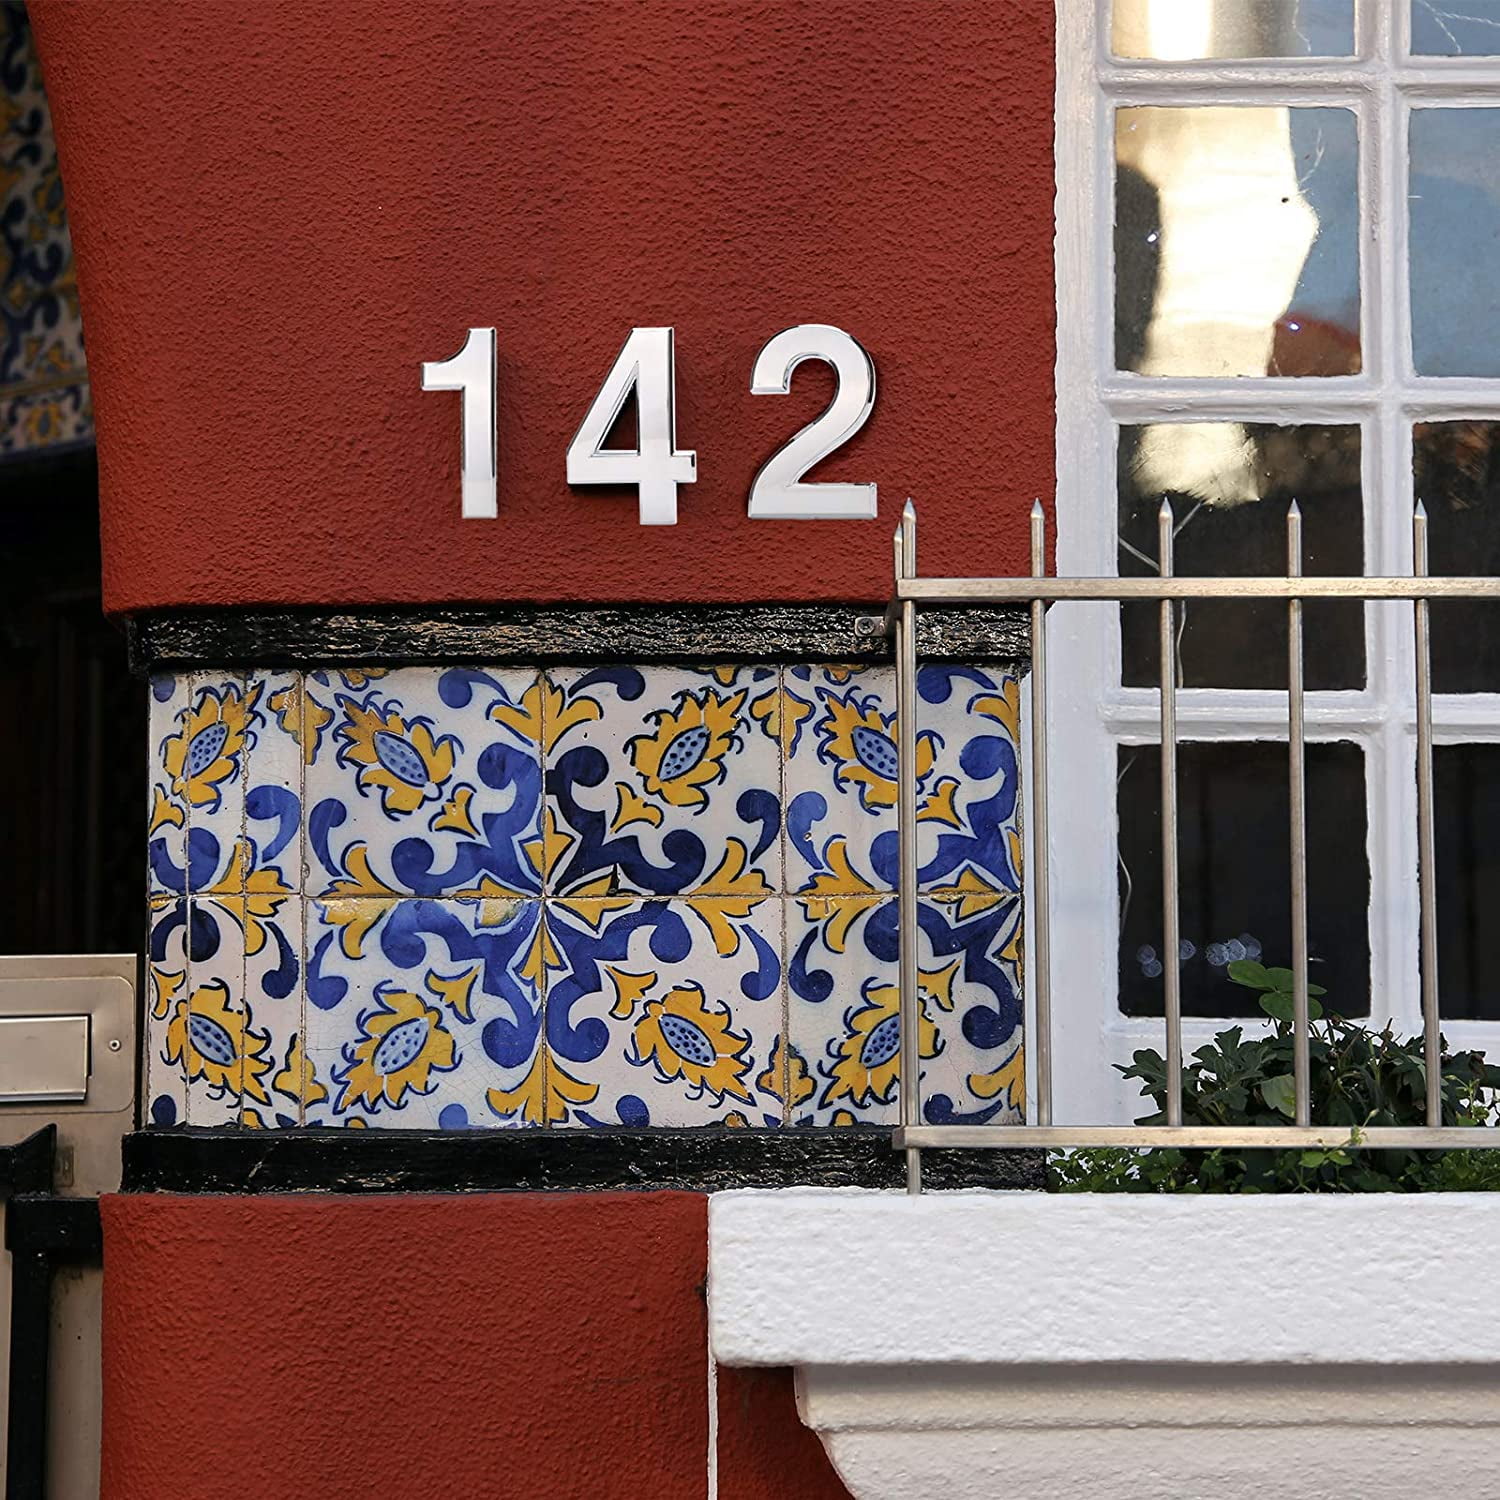 Pastel Beige High Quality 3D Door Number House Number Sign Plaque